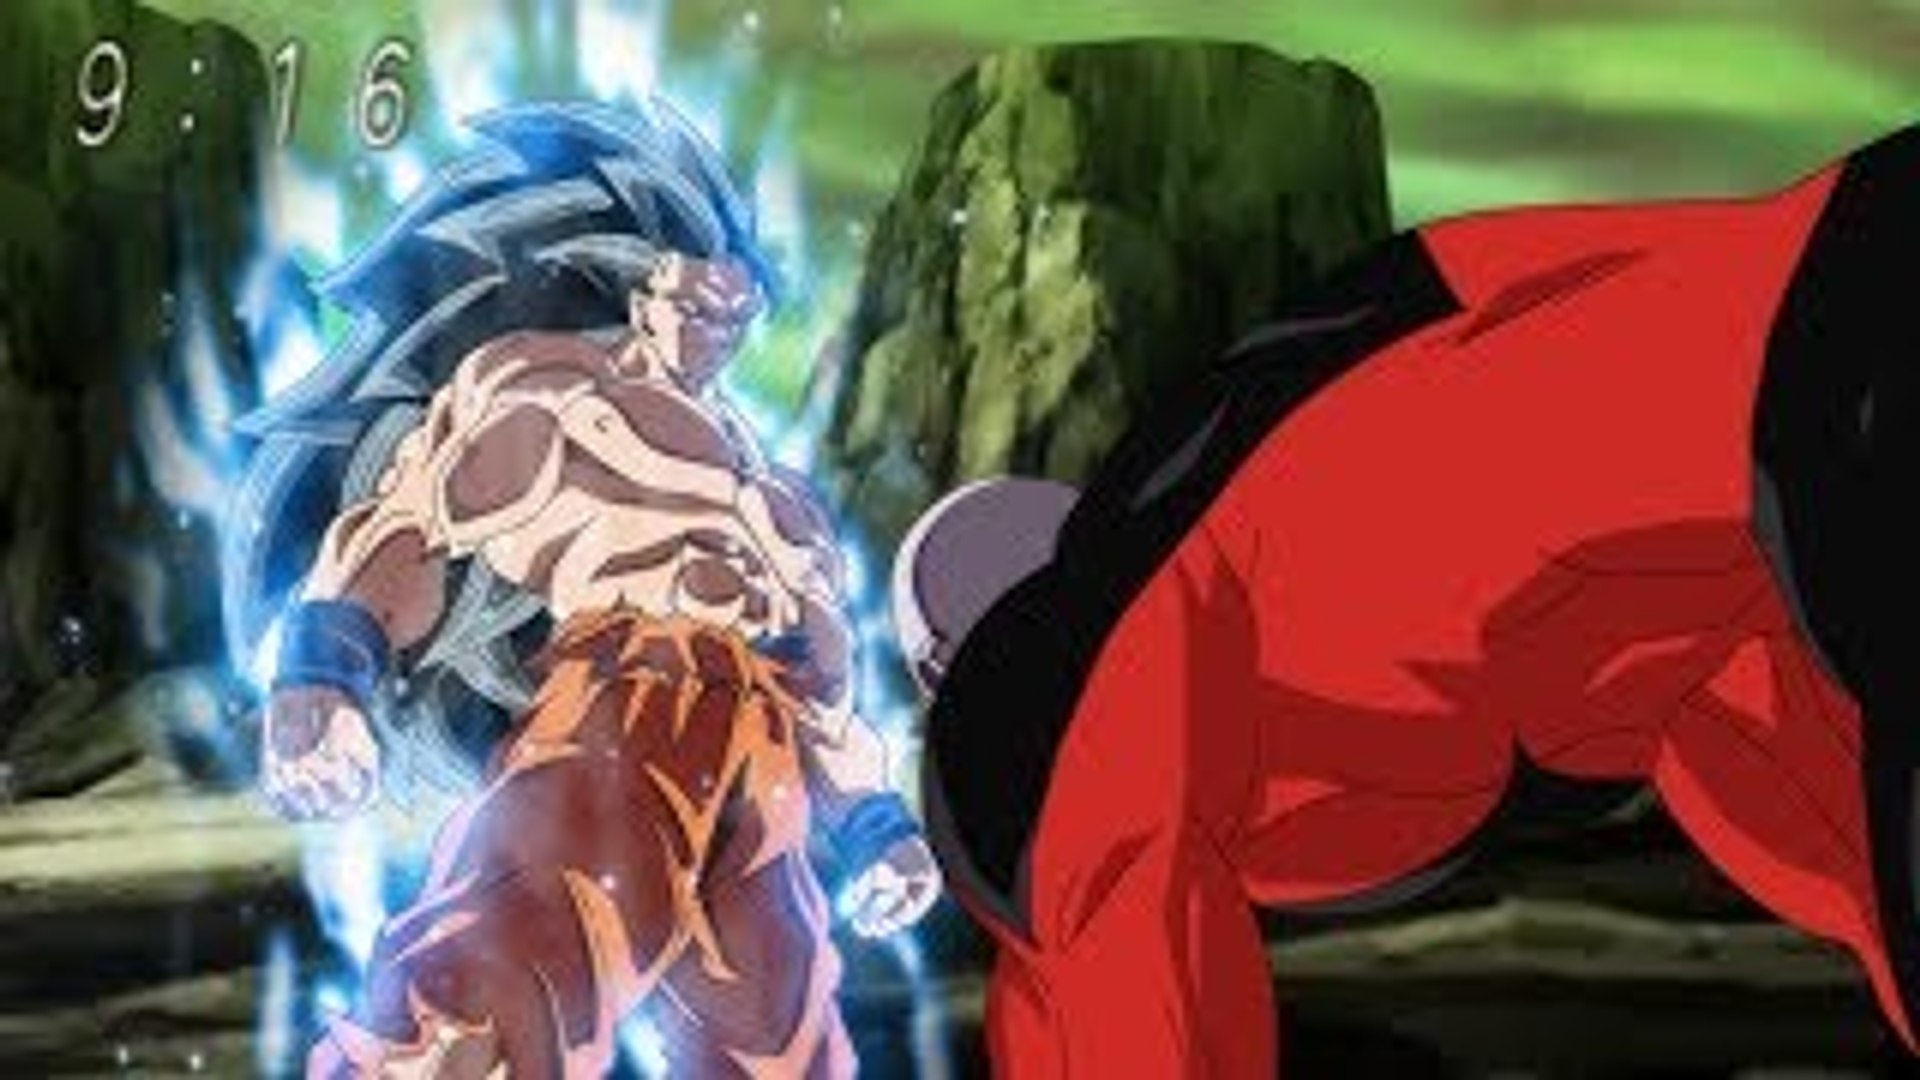 Dragon ball Super Episode 125 Leaked | Goku Ultra Instinct ssj3 vs Jiren -  video Dailymotion